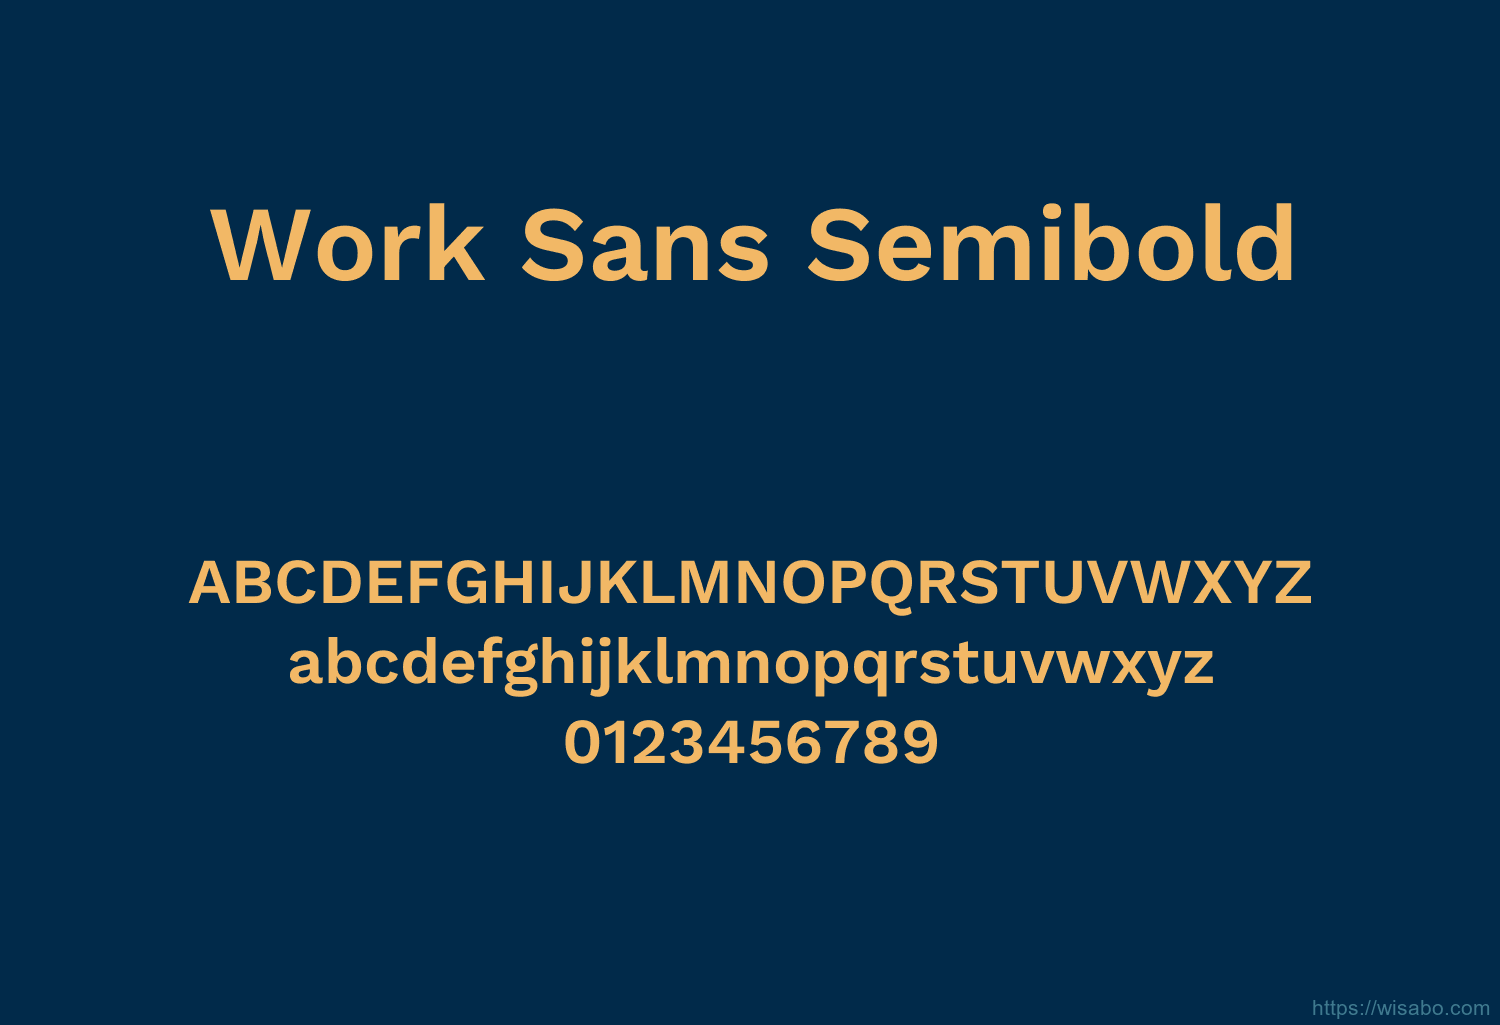 Work Sans Semibold